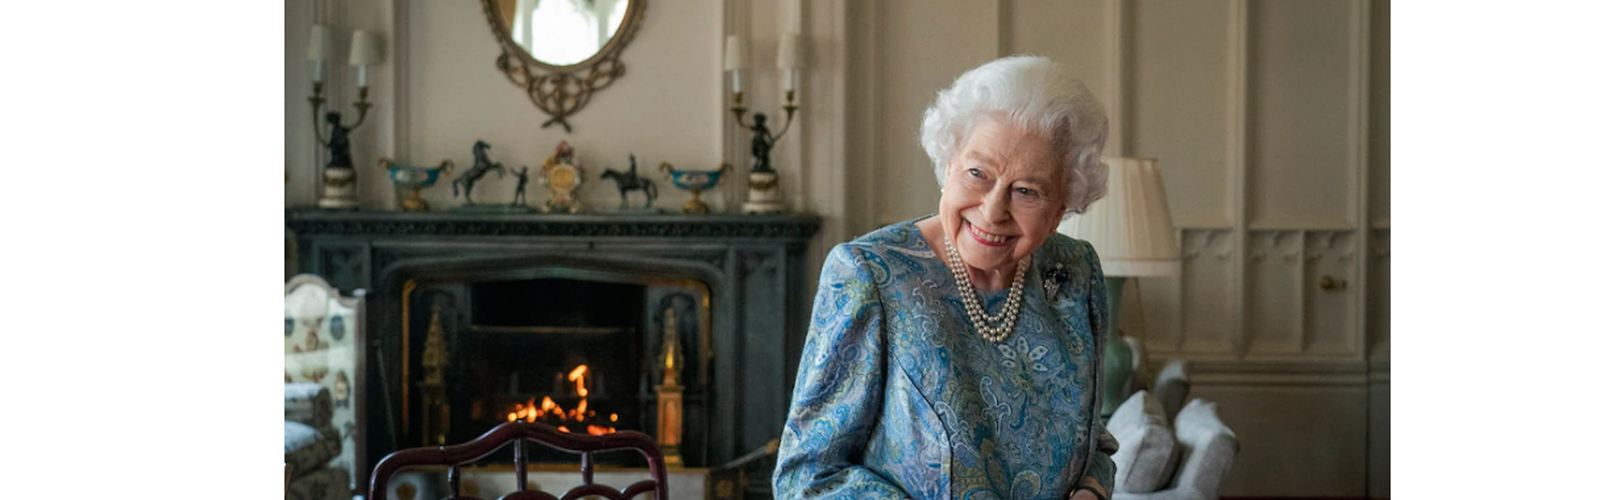 Her Majesty on Platinum Jubilee